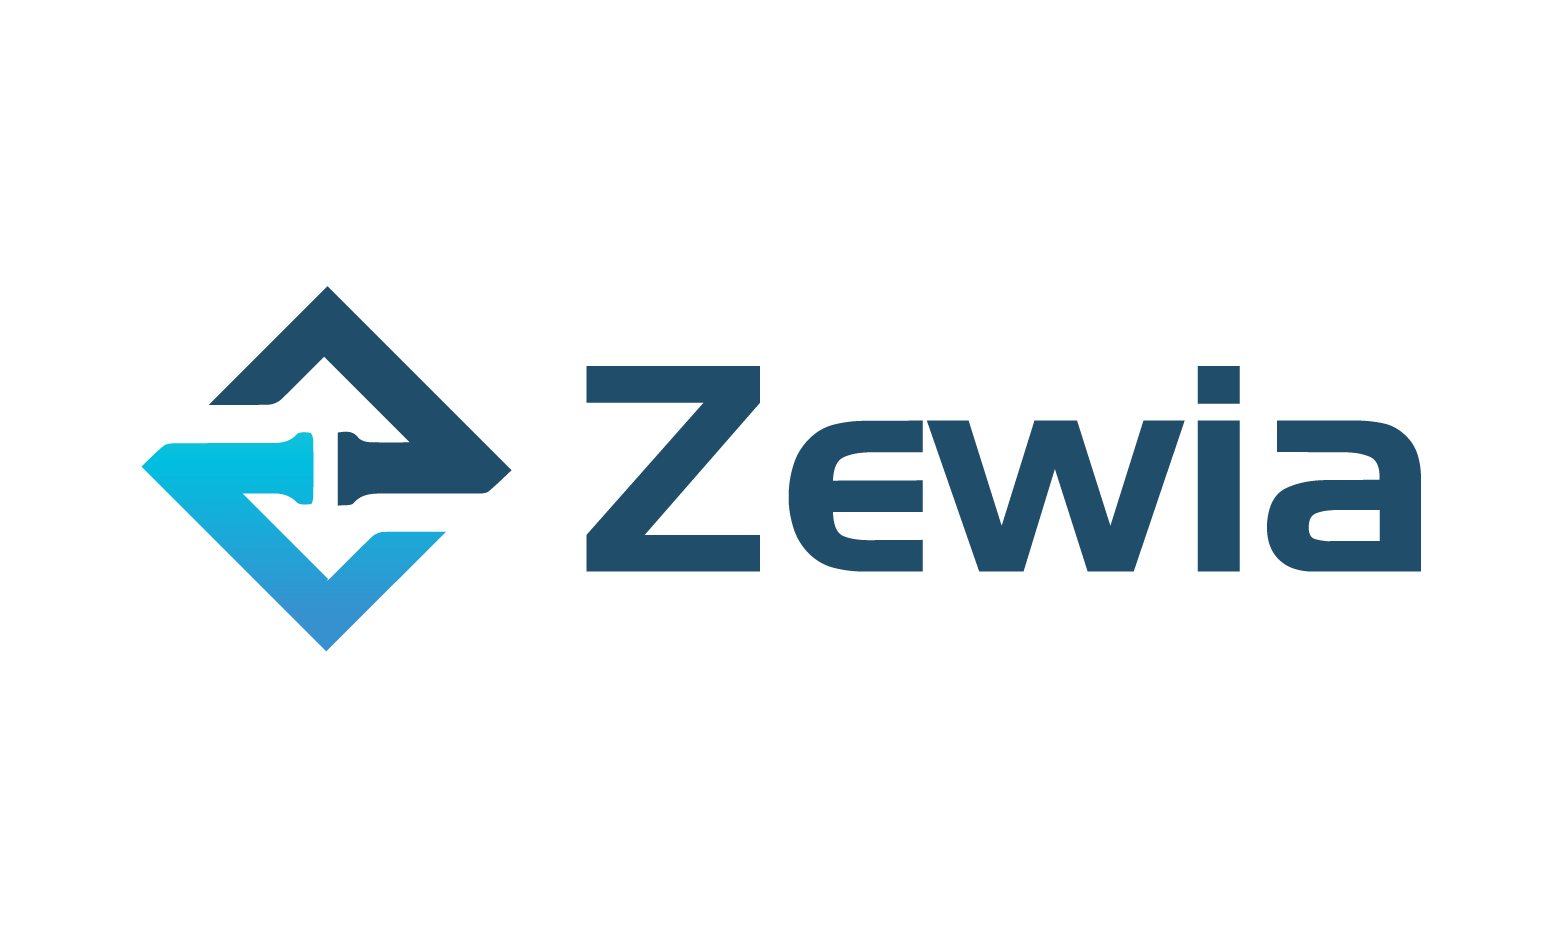 Zewia.com - Creative brandable domain for sale